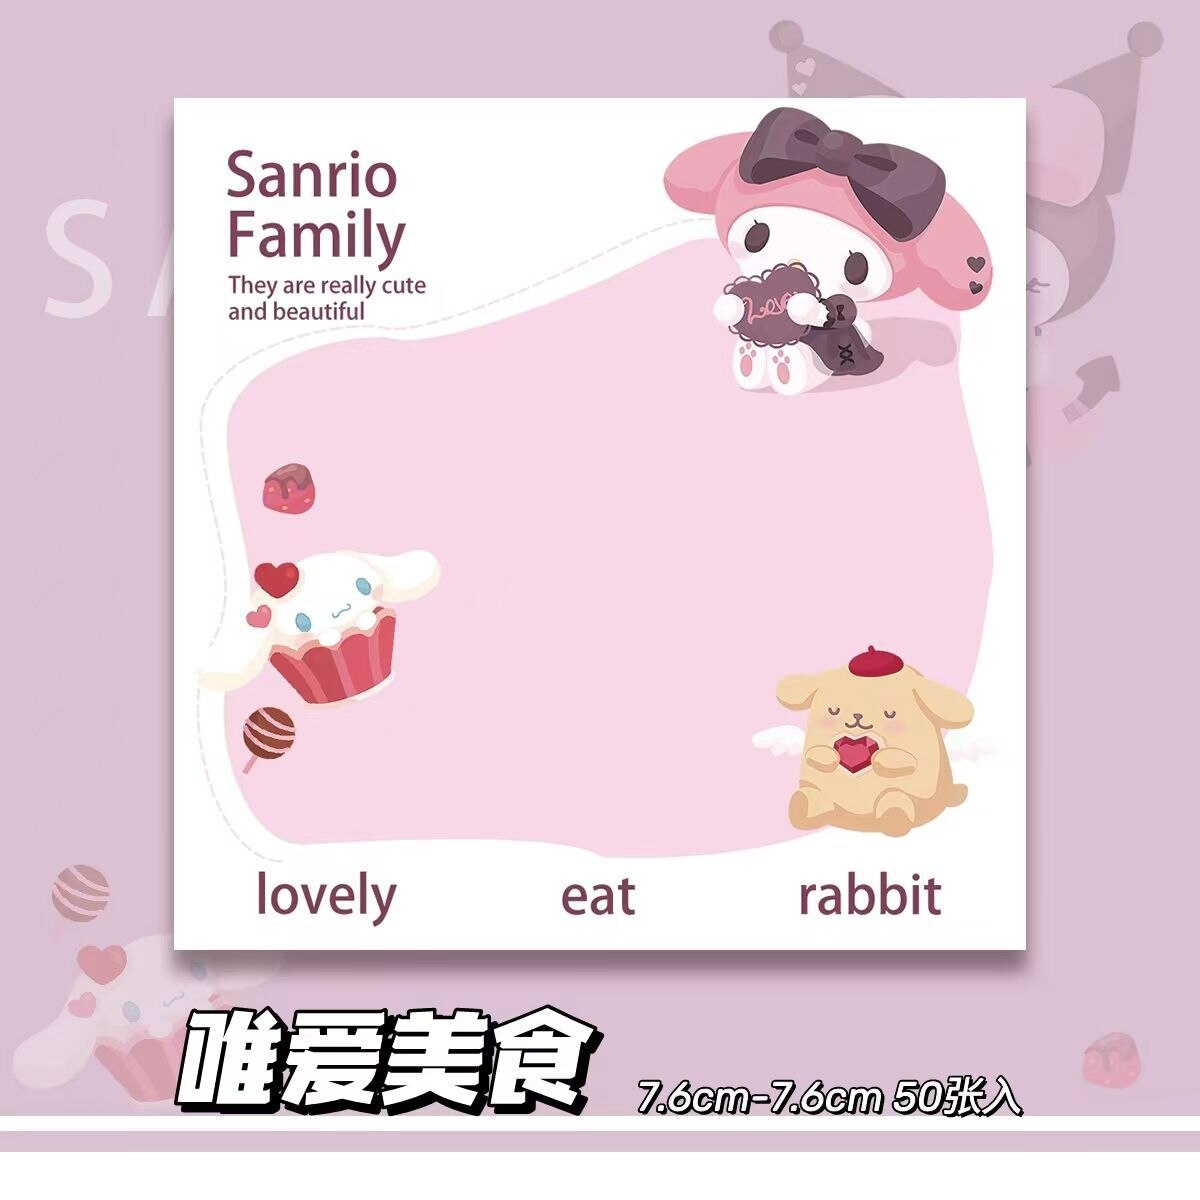 Sanrio Stationary Sets